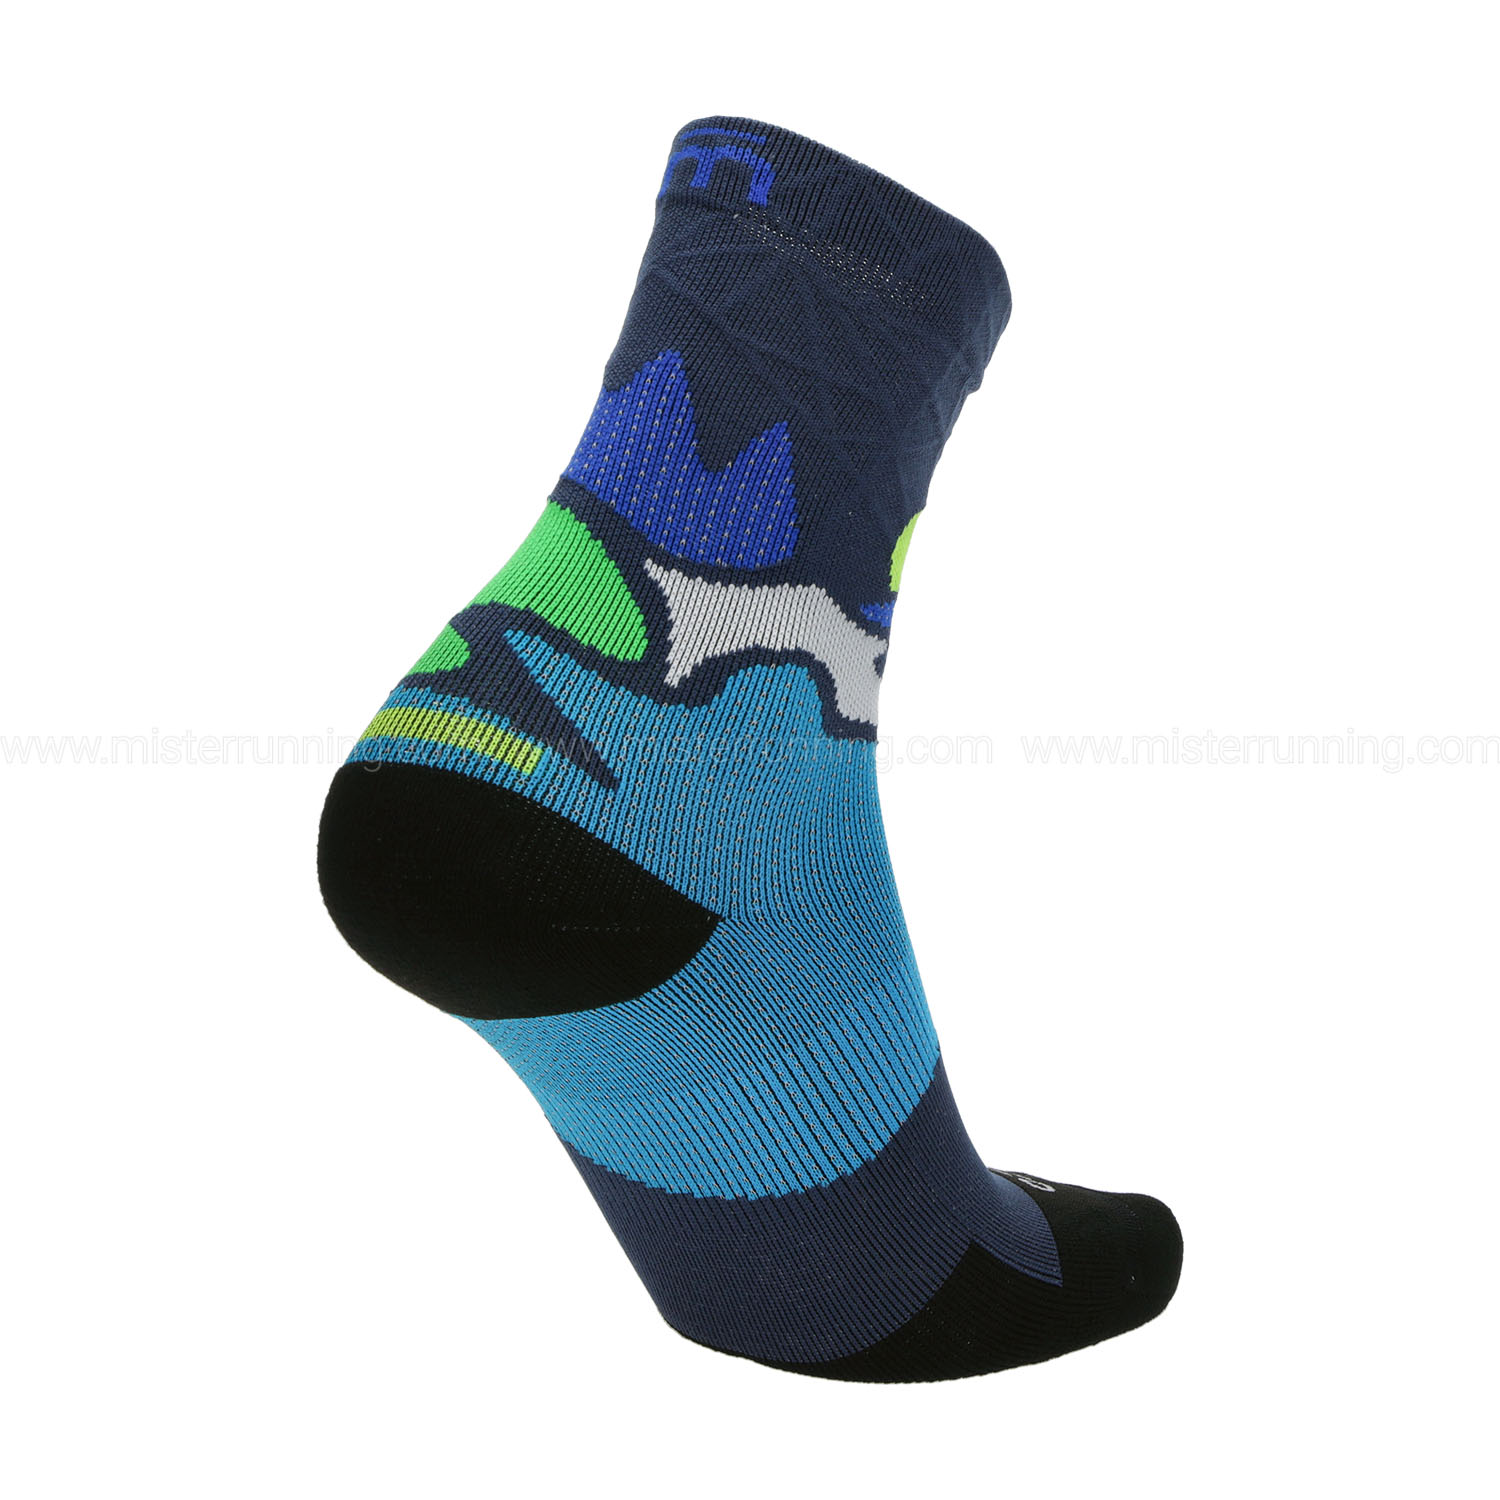 Mico Extra Dry Light Weight Socks Woman - Blu